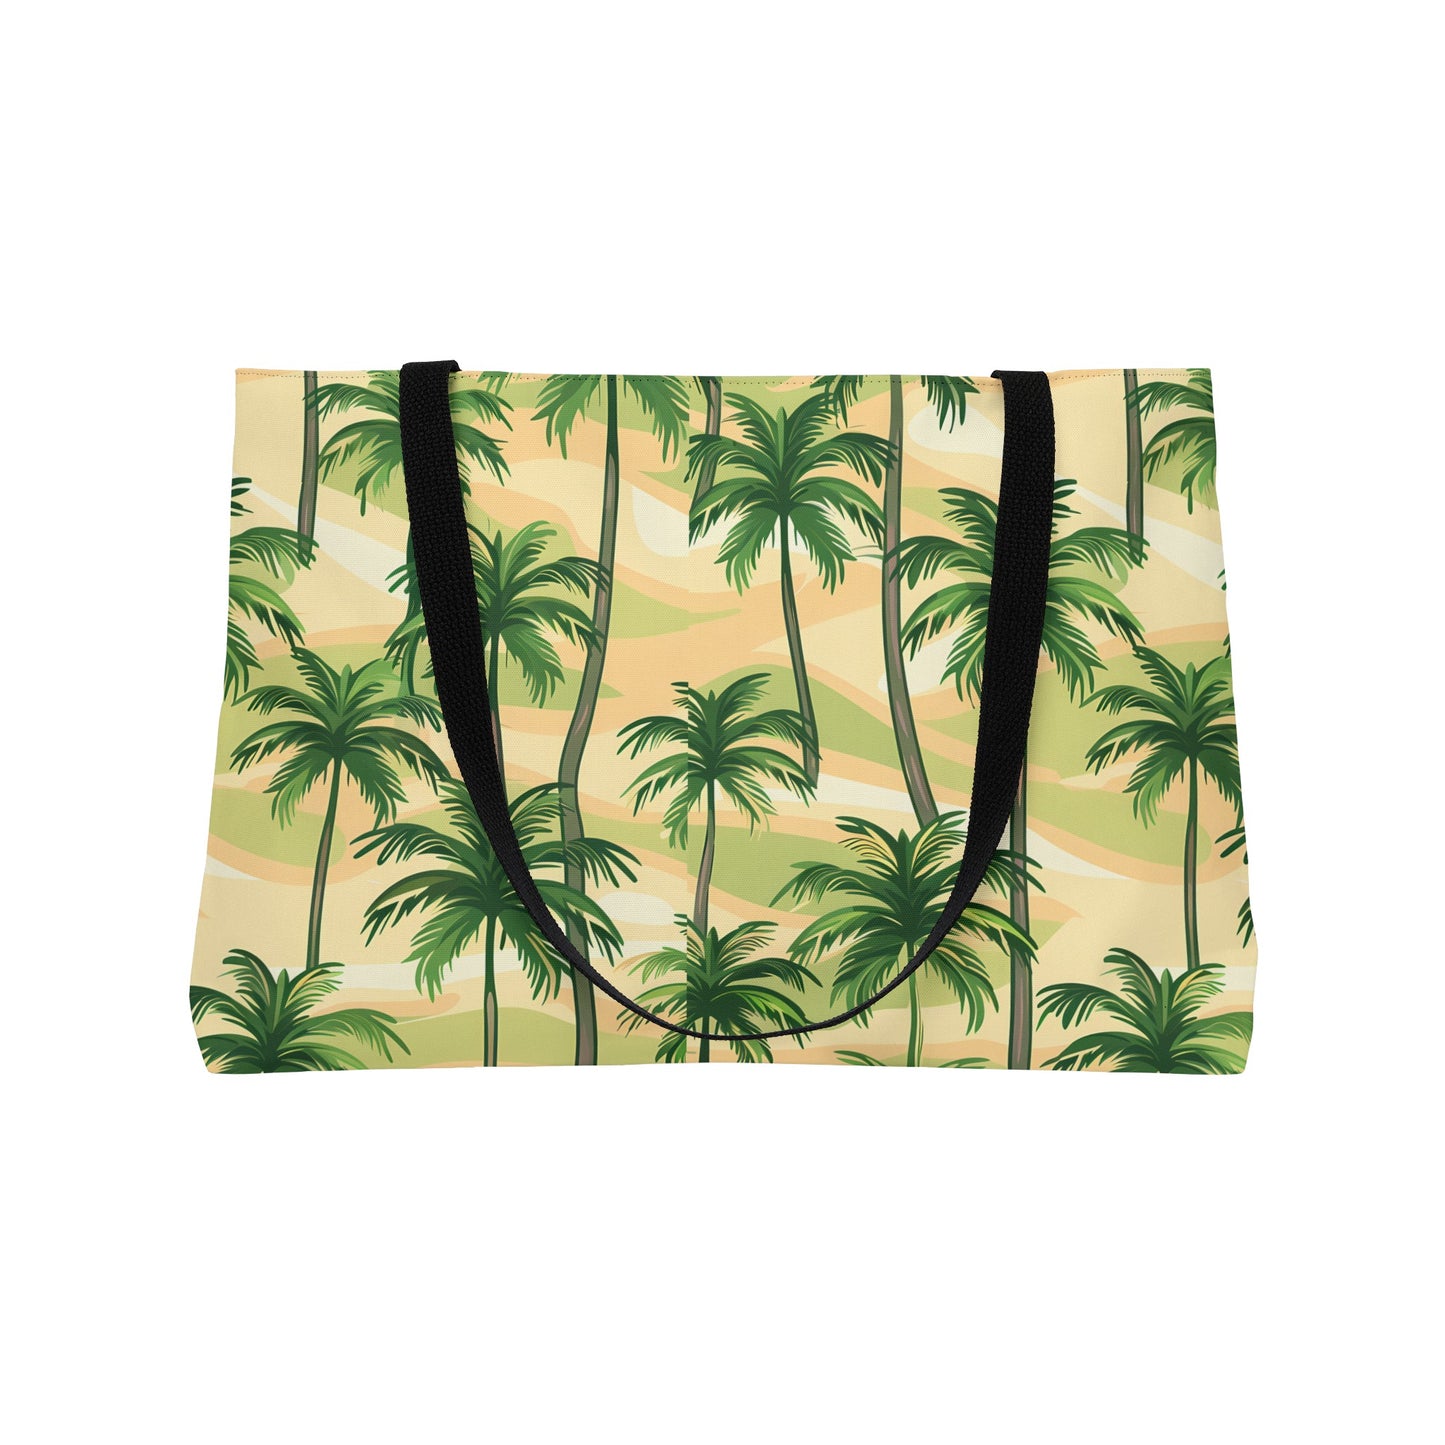 Tropical Tote Bag Palm Trees Design (24" x 13" x 2")